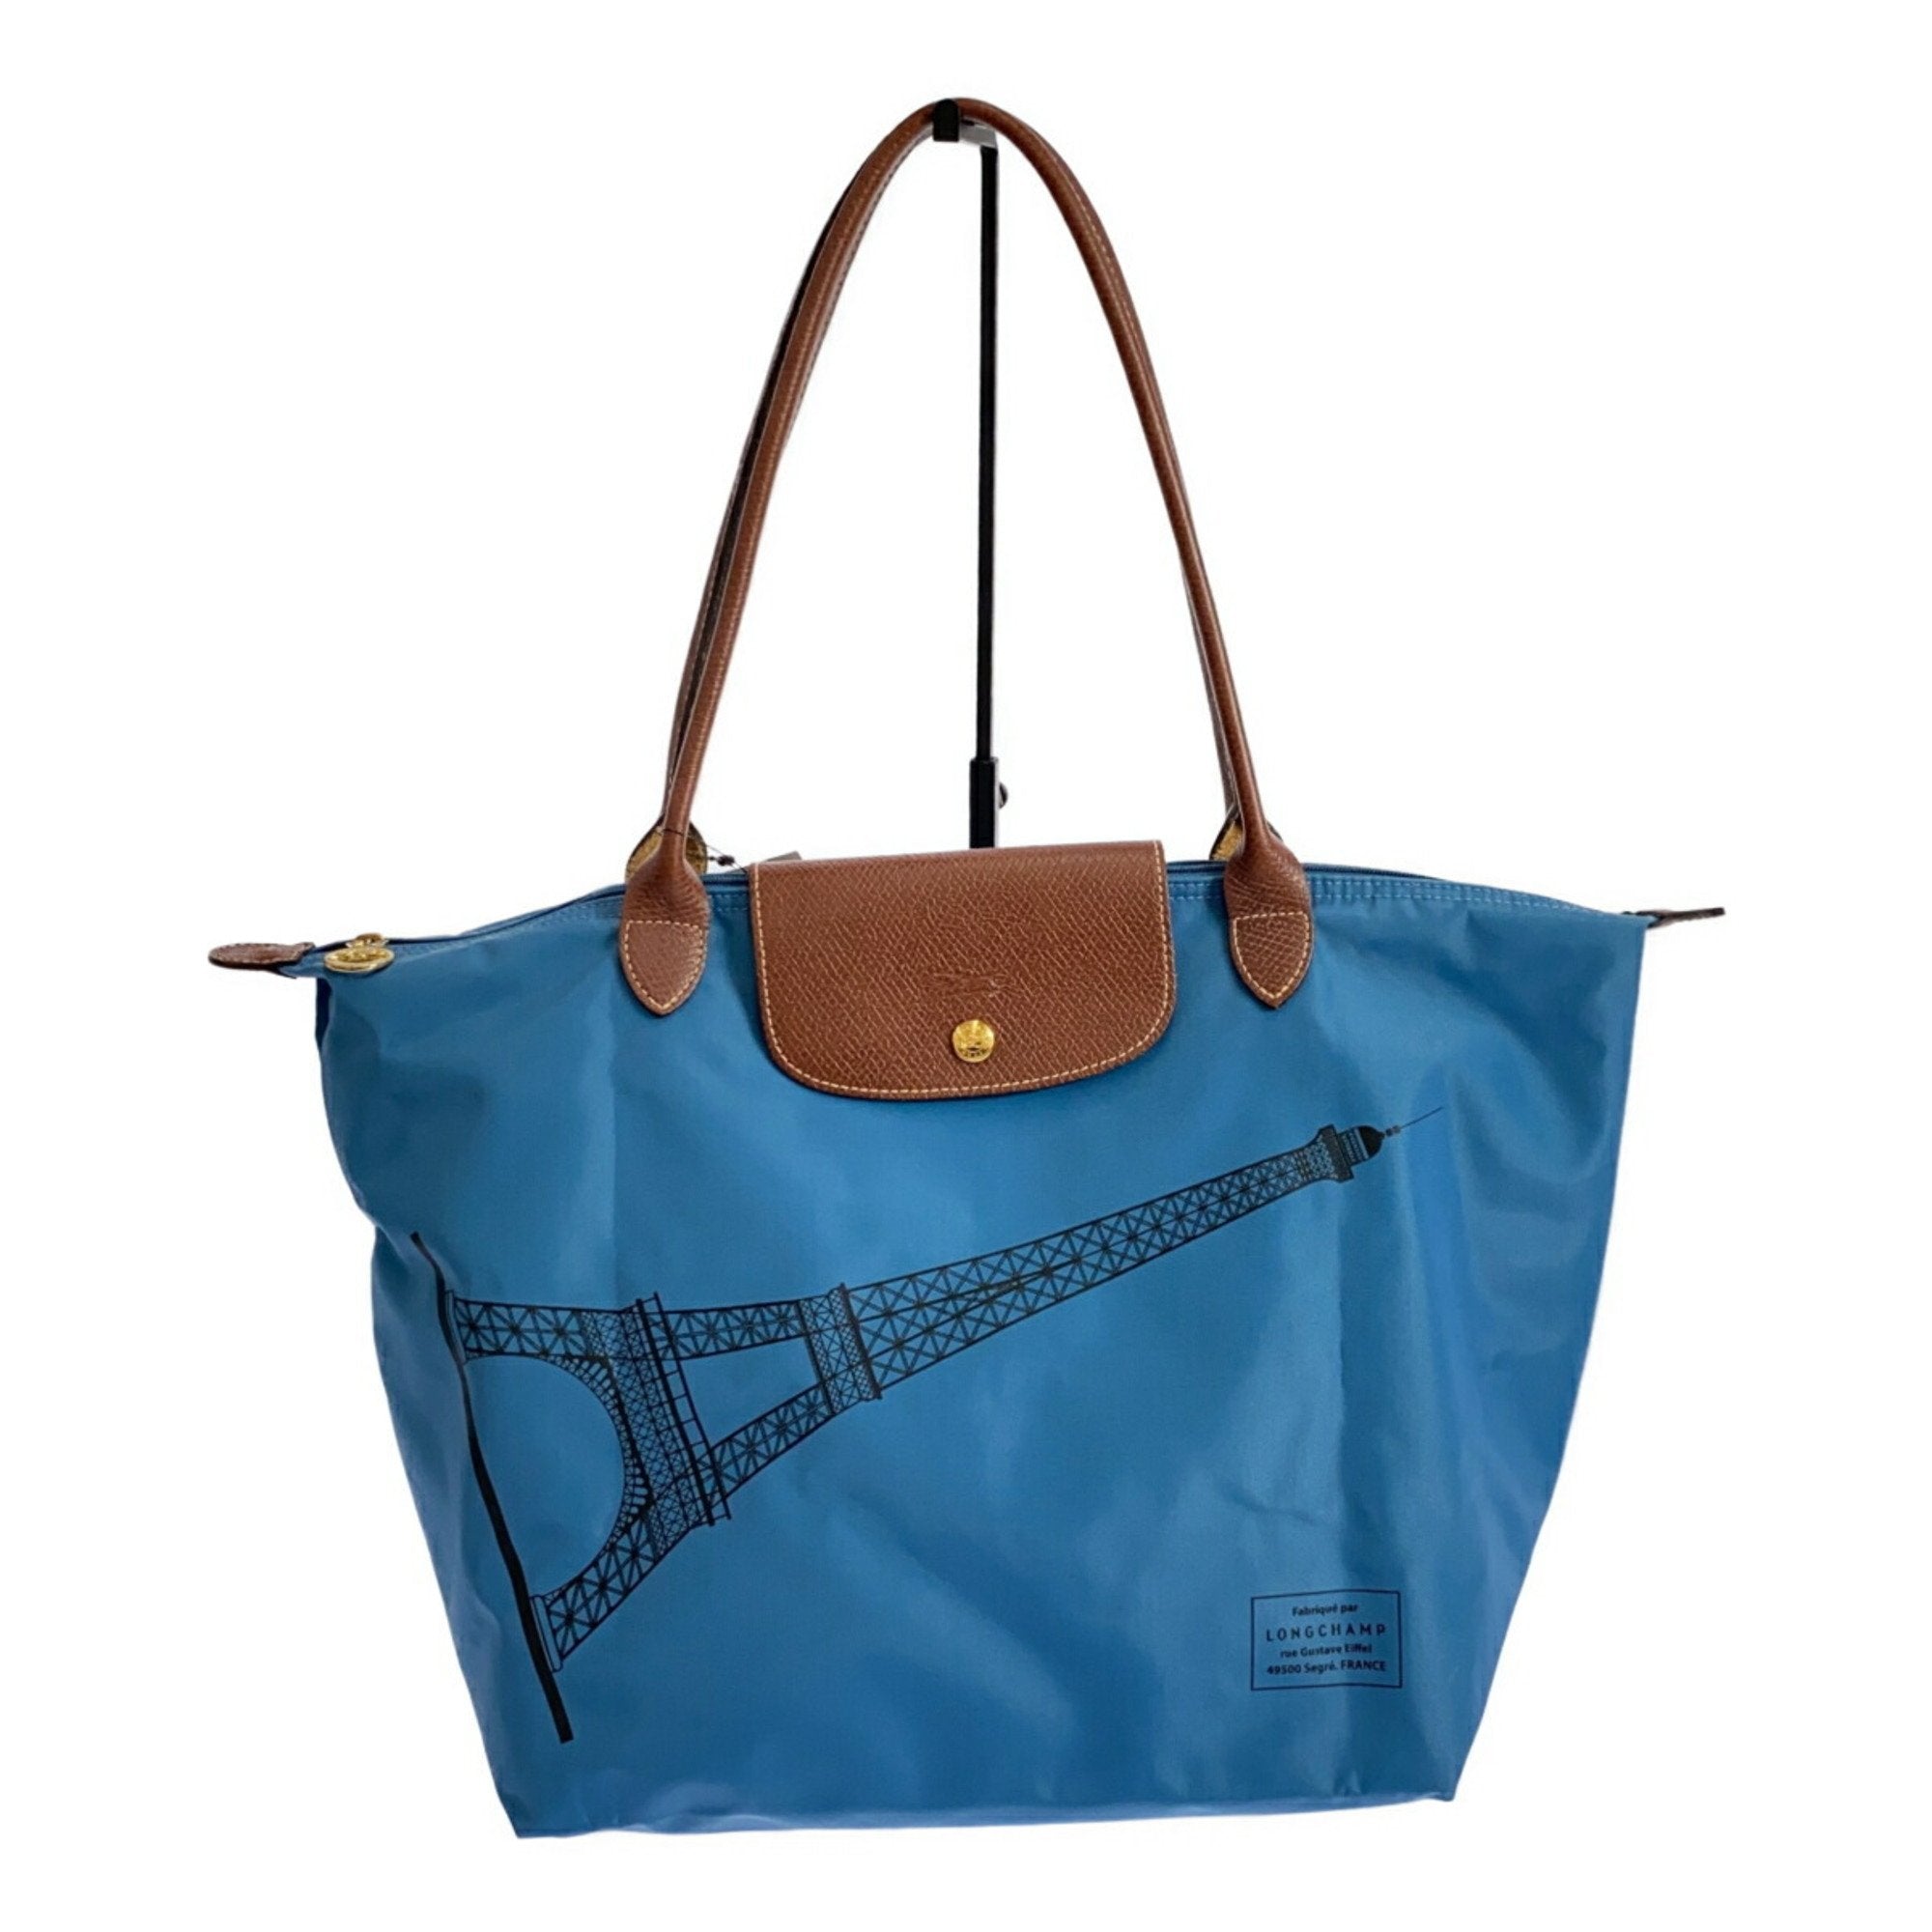 Le Pliage Eiffel Tower Print Tote Bag Shoulder Nylon Leather Blue Brown Mikunigaoka Store ITG50SZ9PX6P RM3614M